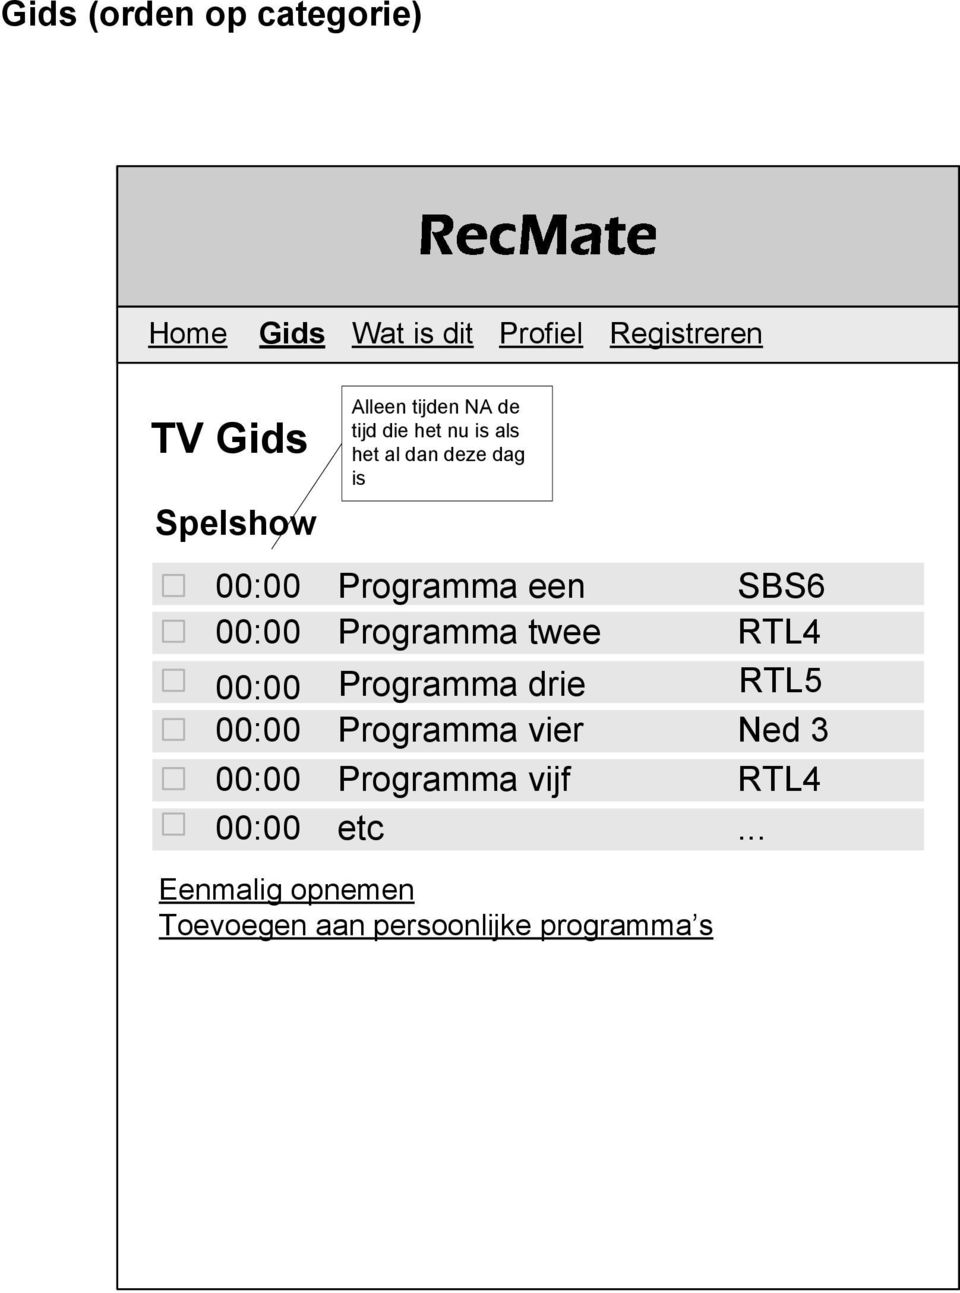 twee RTL4 00:00 Programma drie RTL5 00:00 Programma vier Ned 3 00:00